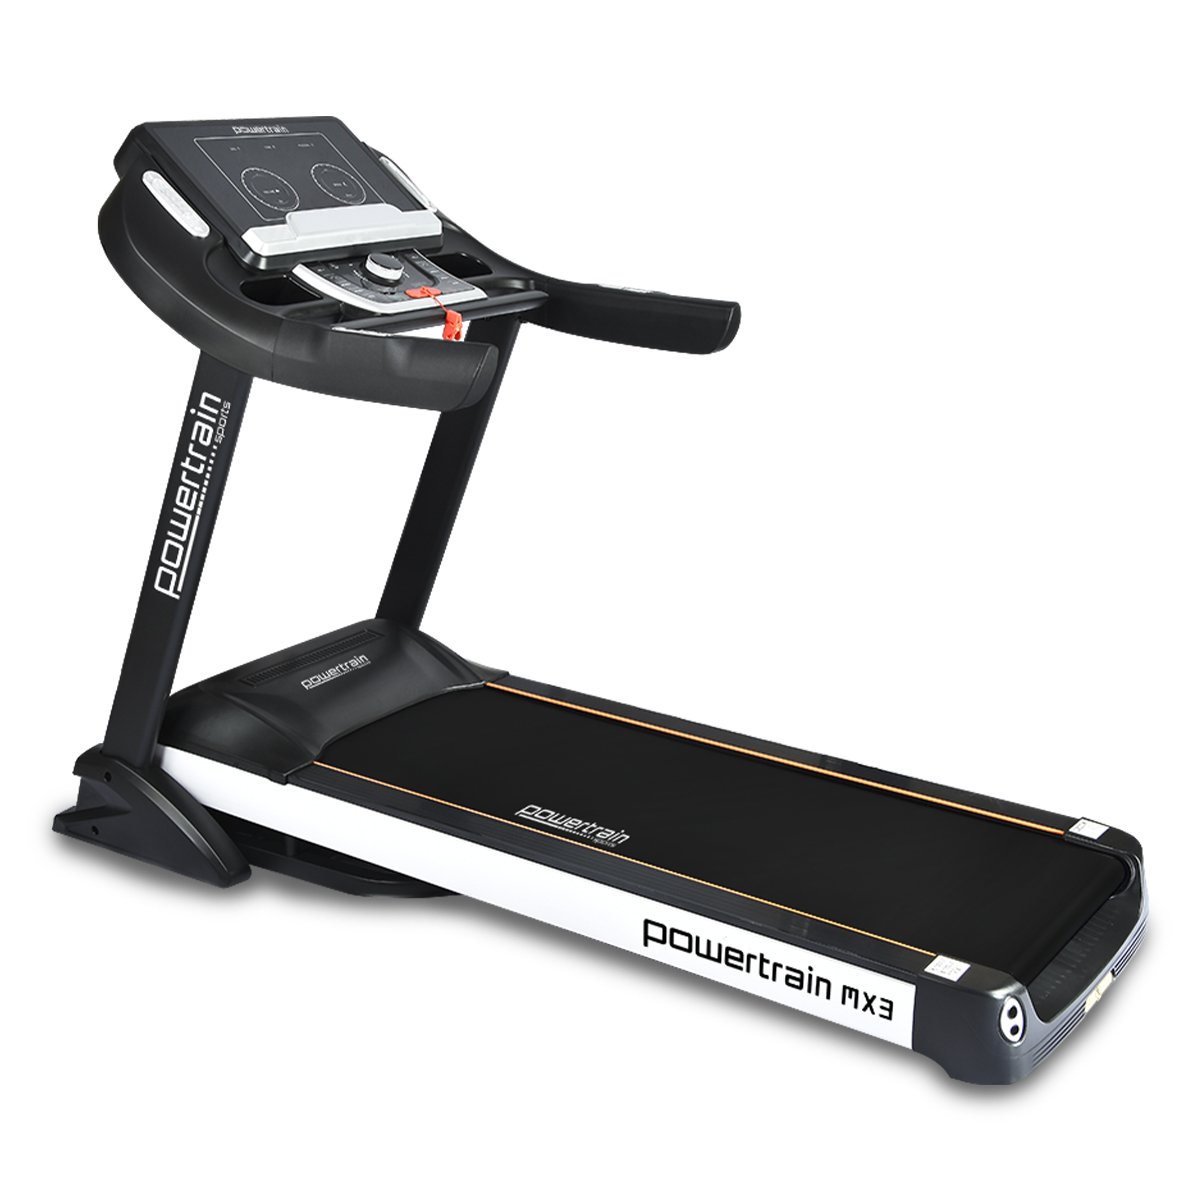 cardio Mx3 treadmill performance home gym cardio